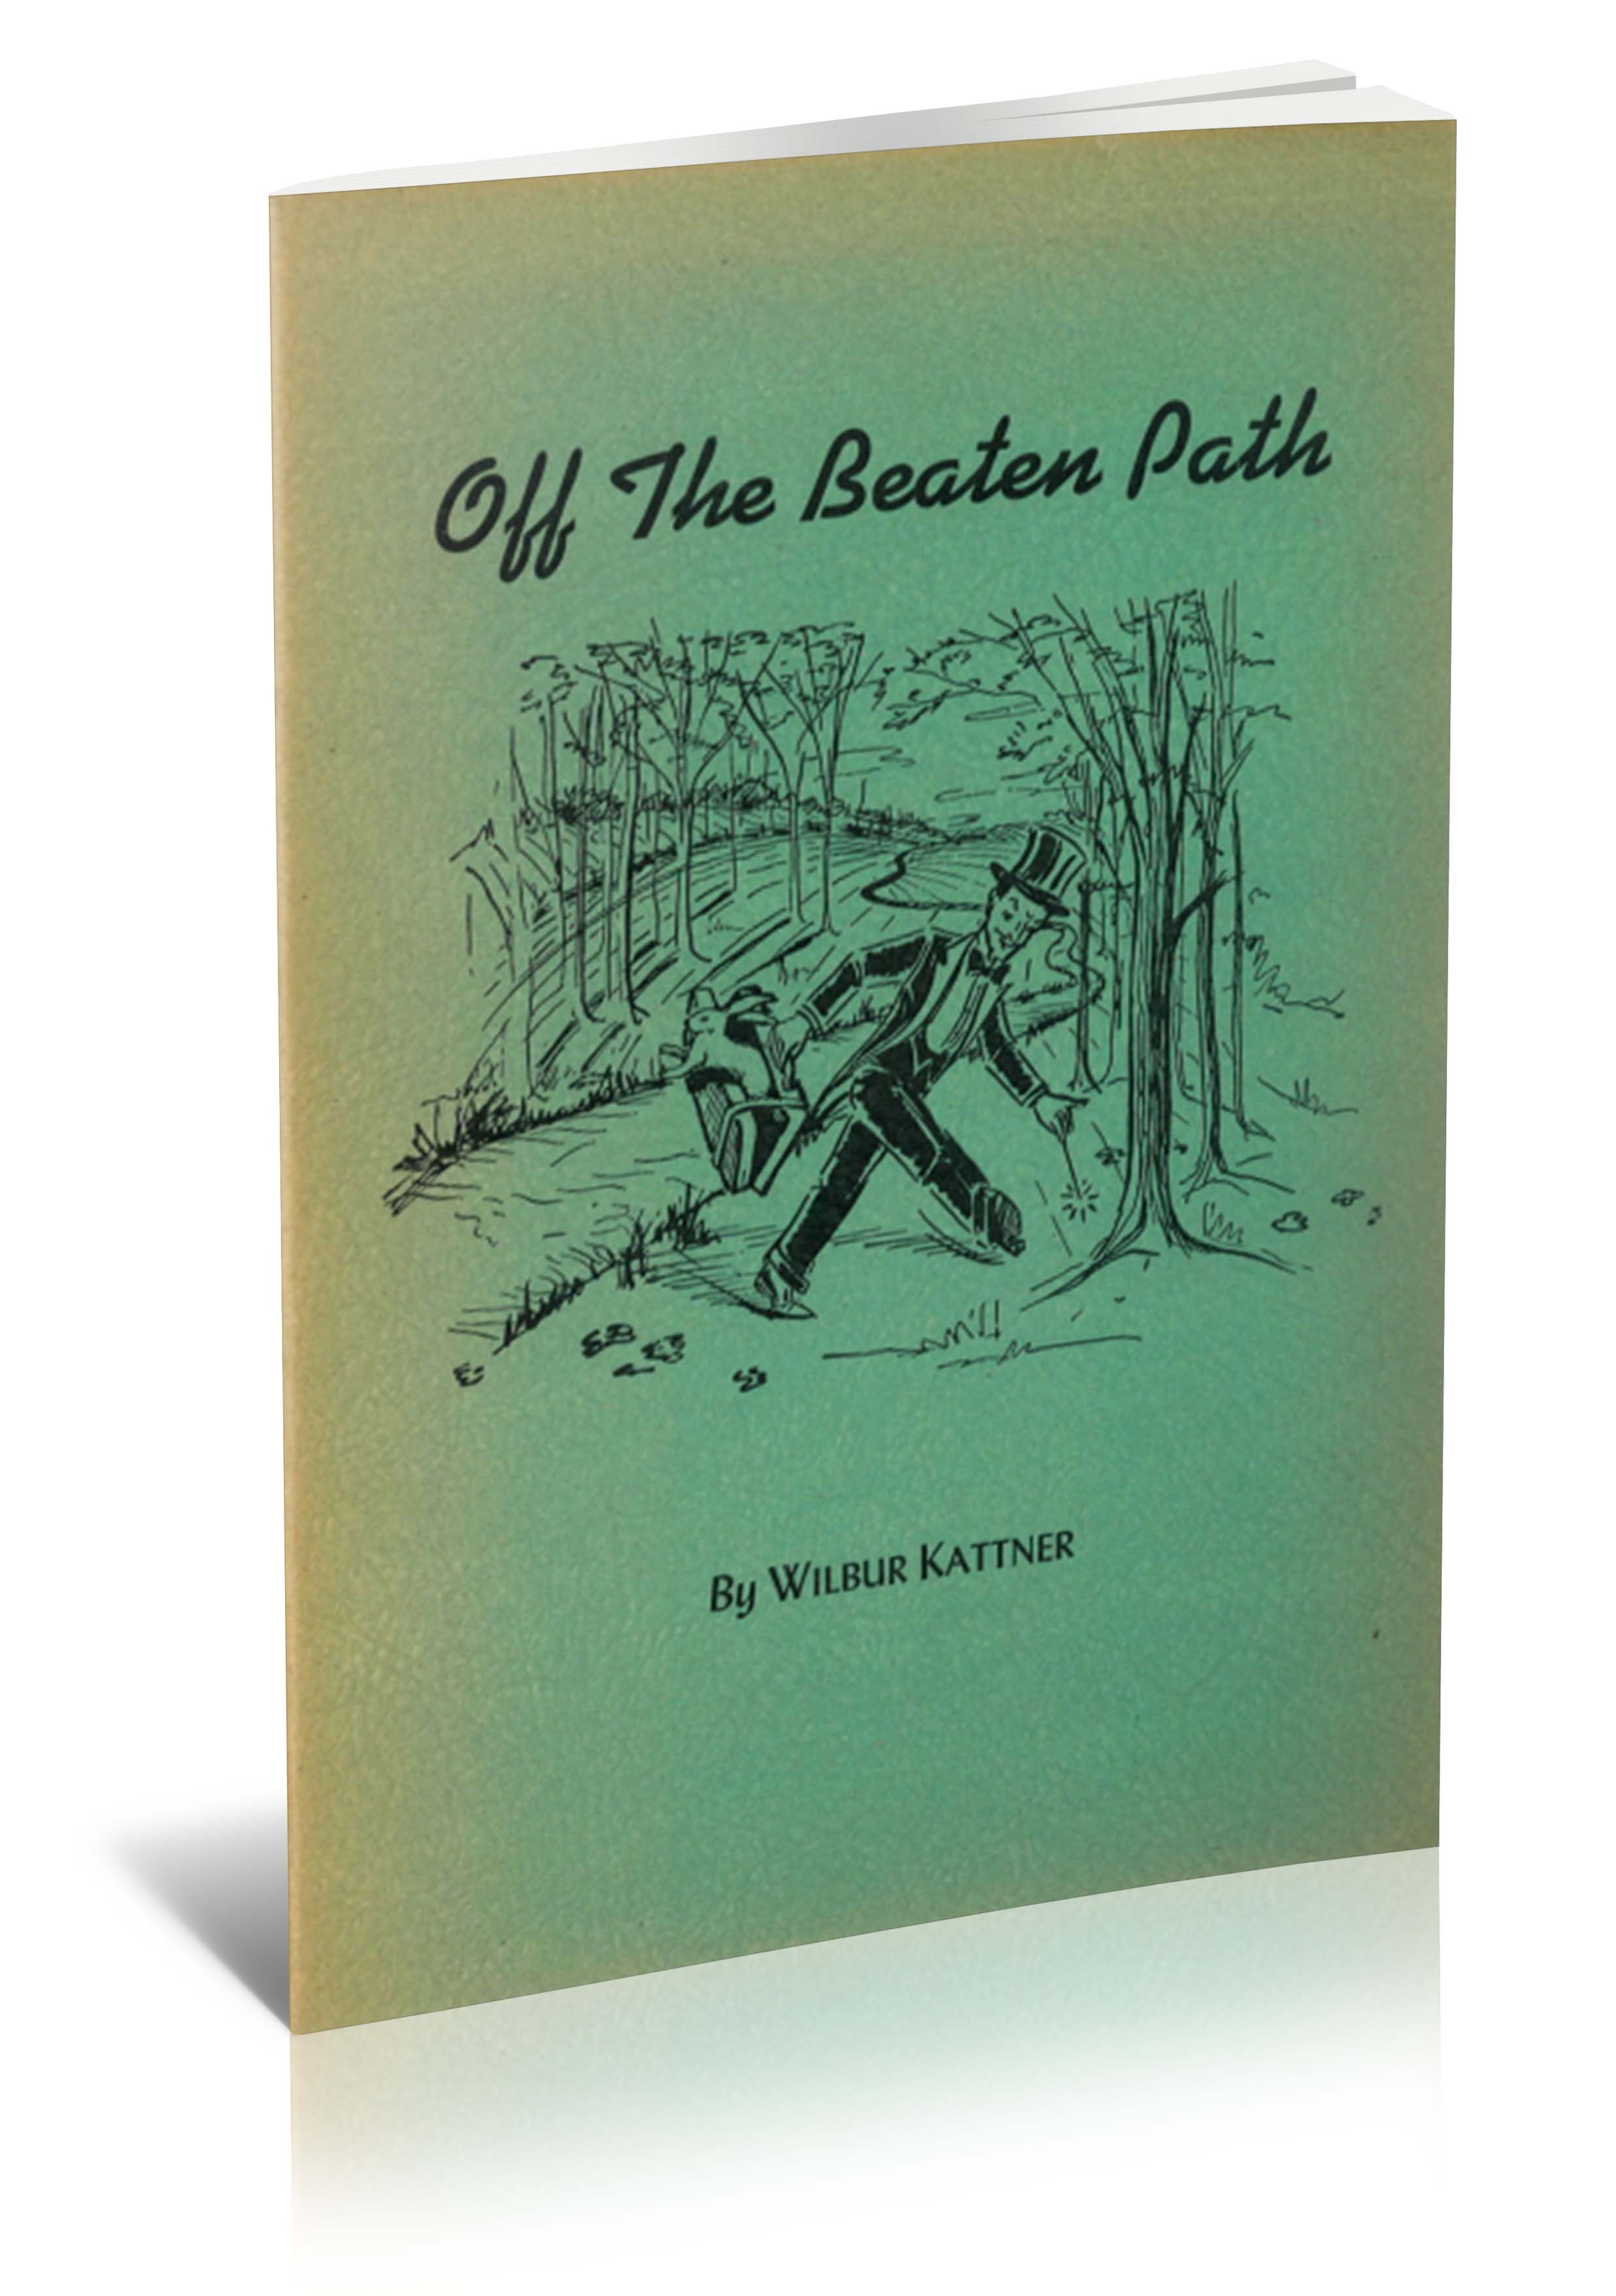 Wilbur T Kattner - Off The Beaten Path (1947)